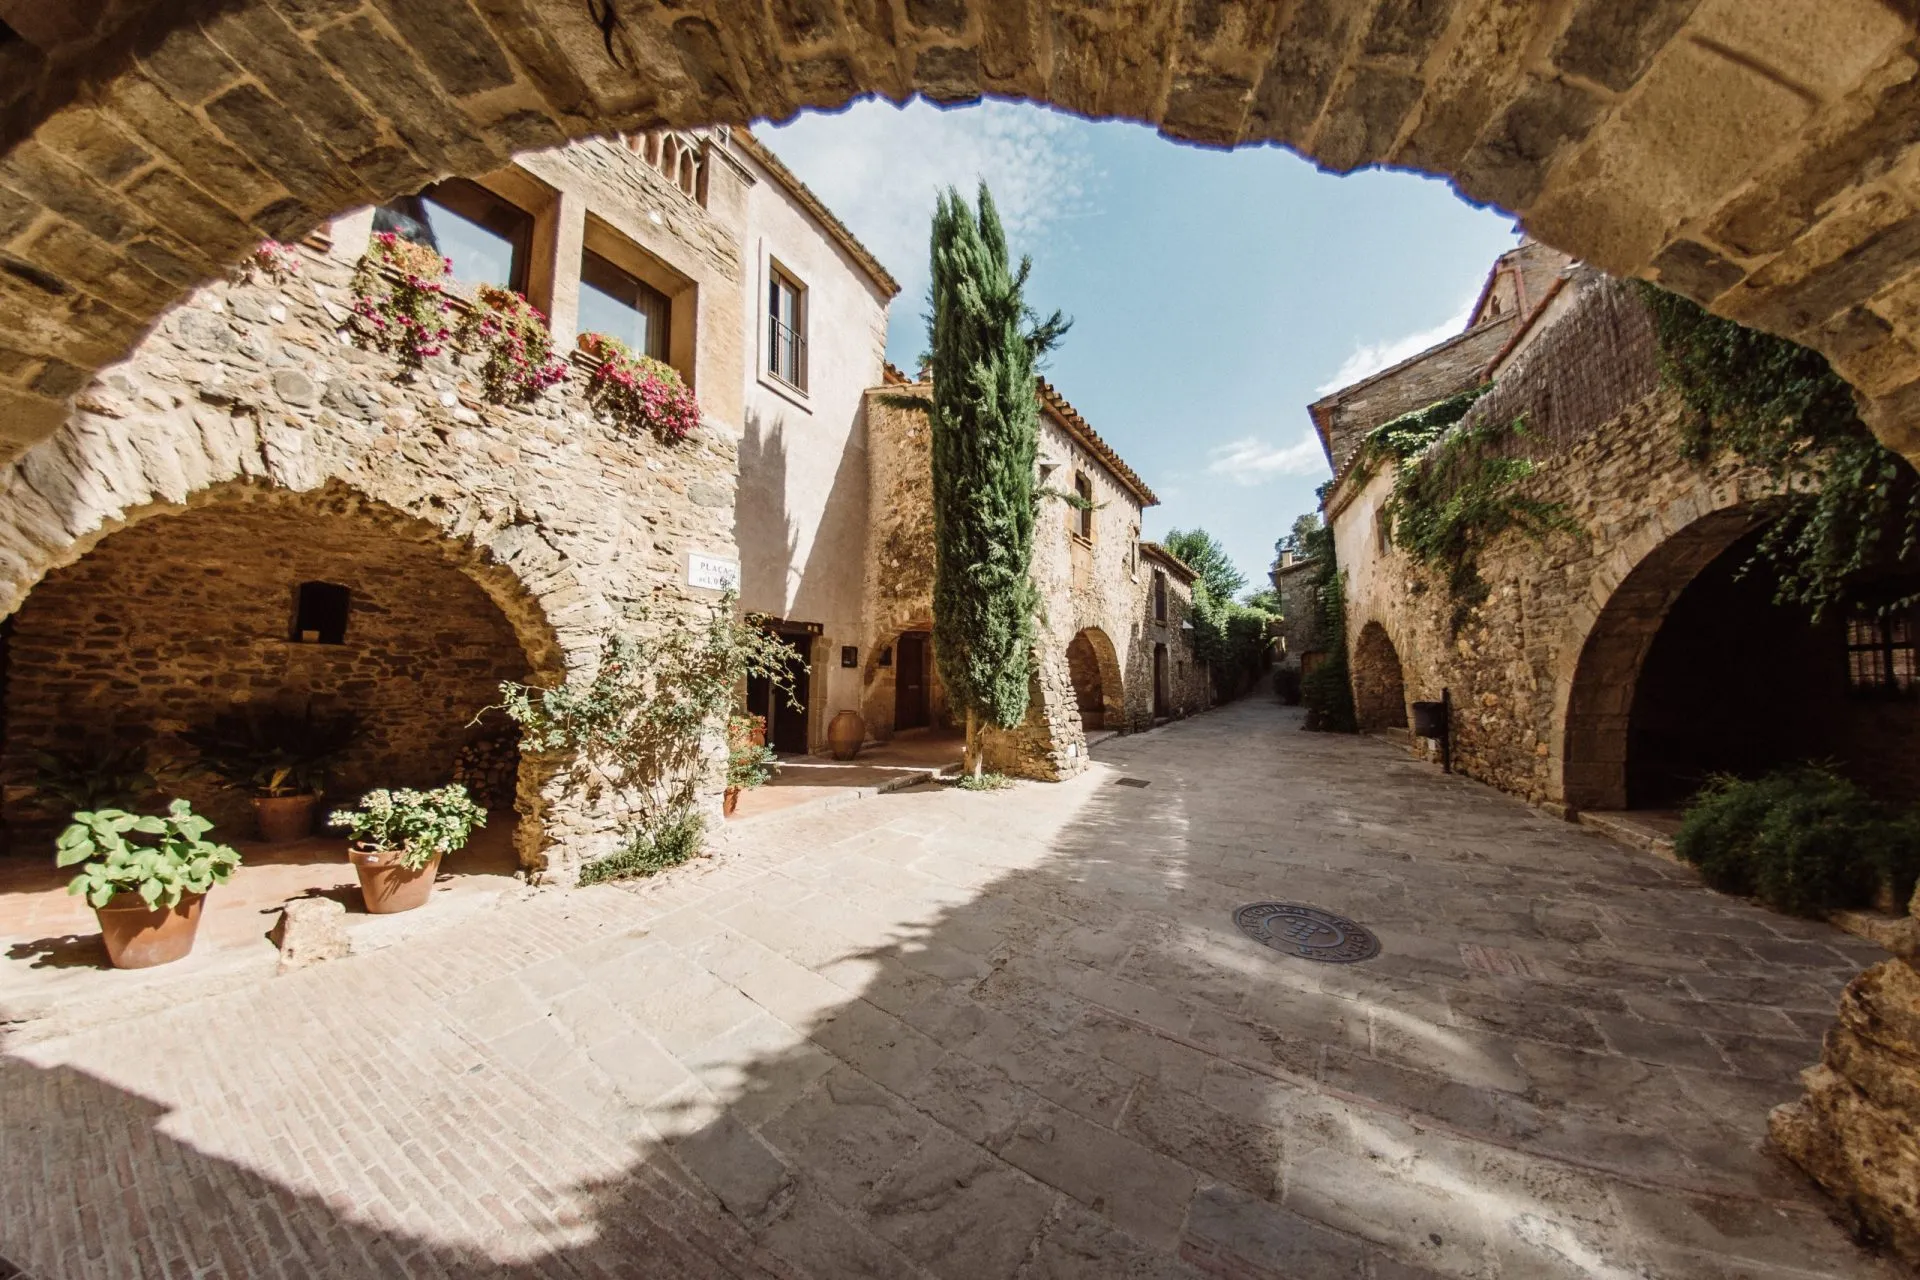 Medieval and touristic town of Monells, la Costa Brava, near Girona, in the north of Catalonia, Spain